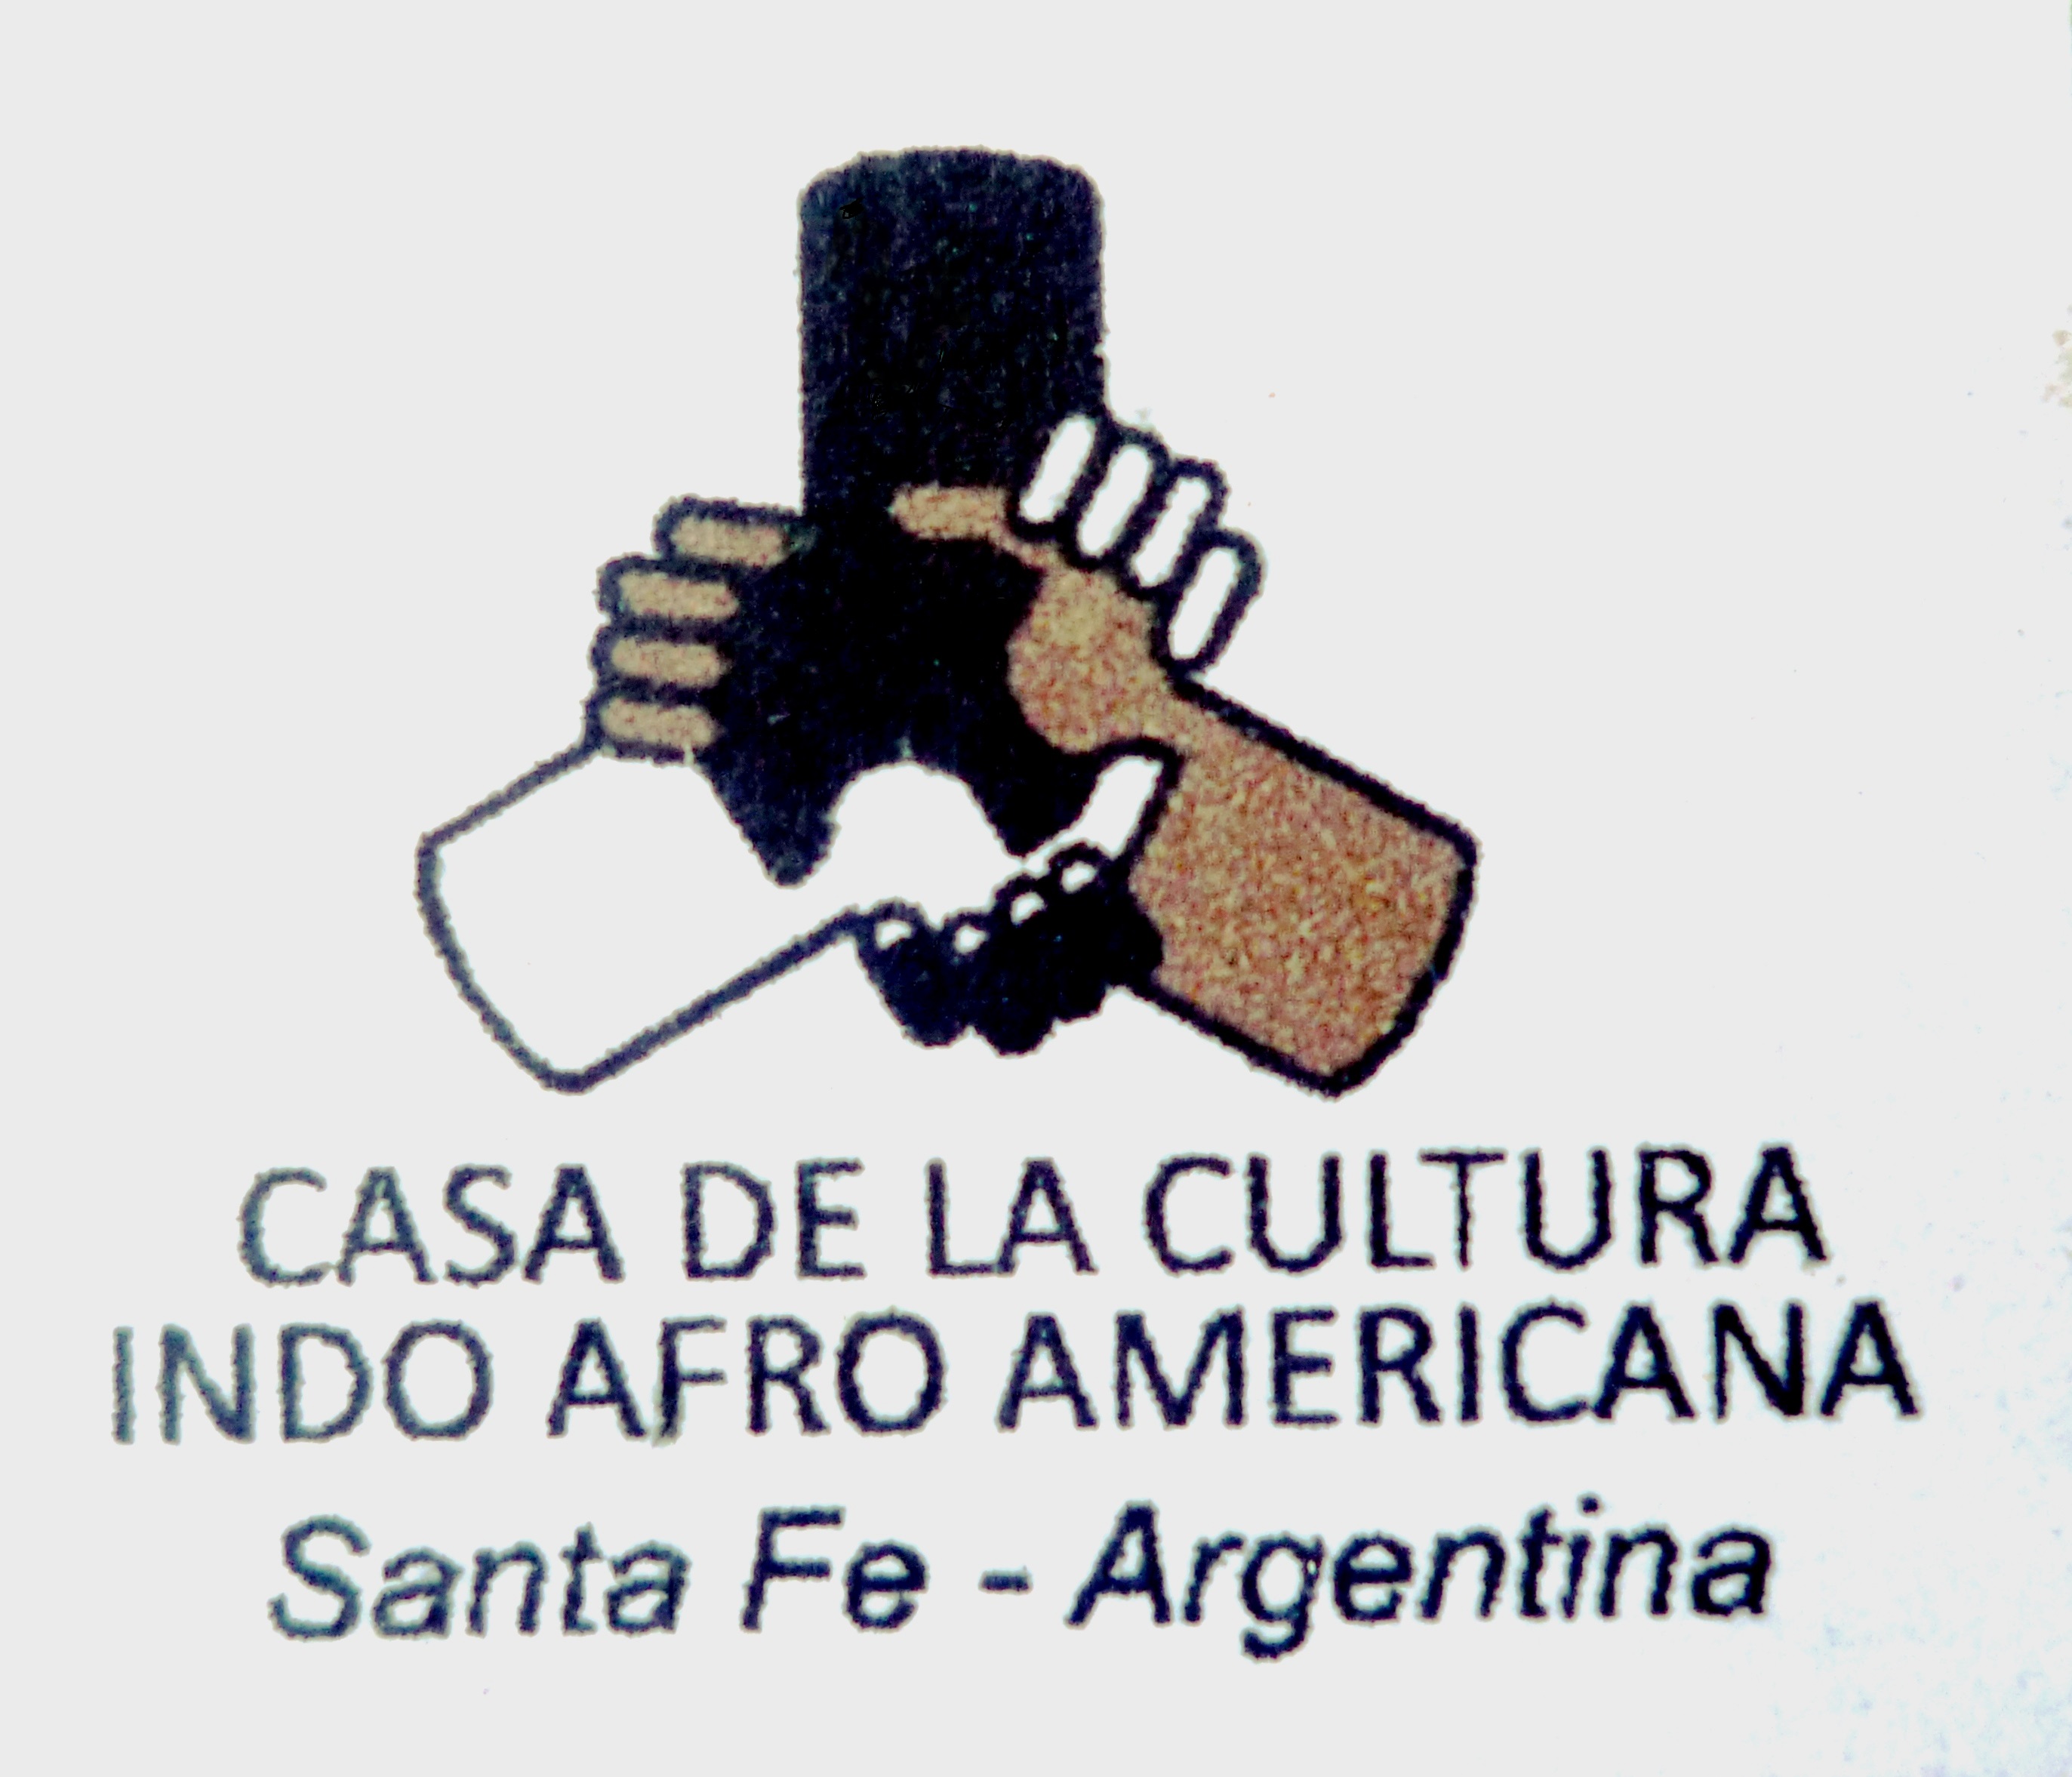 “Mario Luis López” Indo-Afro-American House of Culture. Logo. 